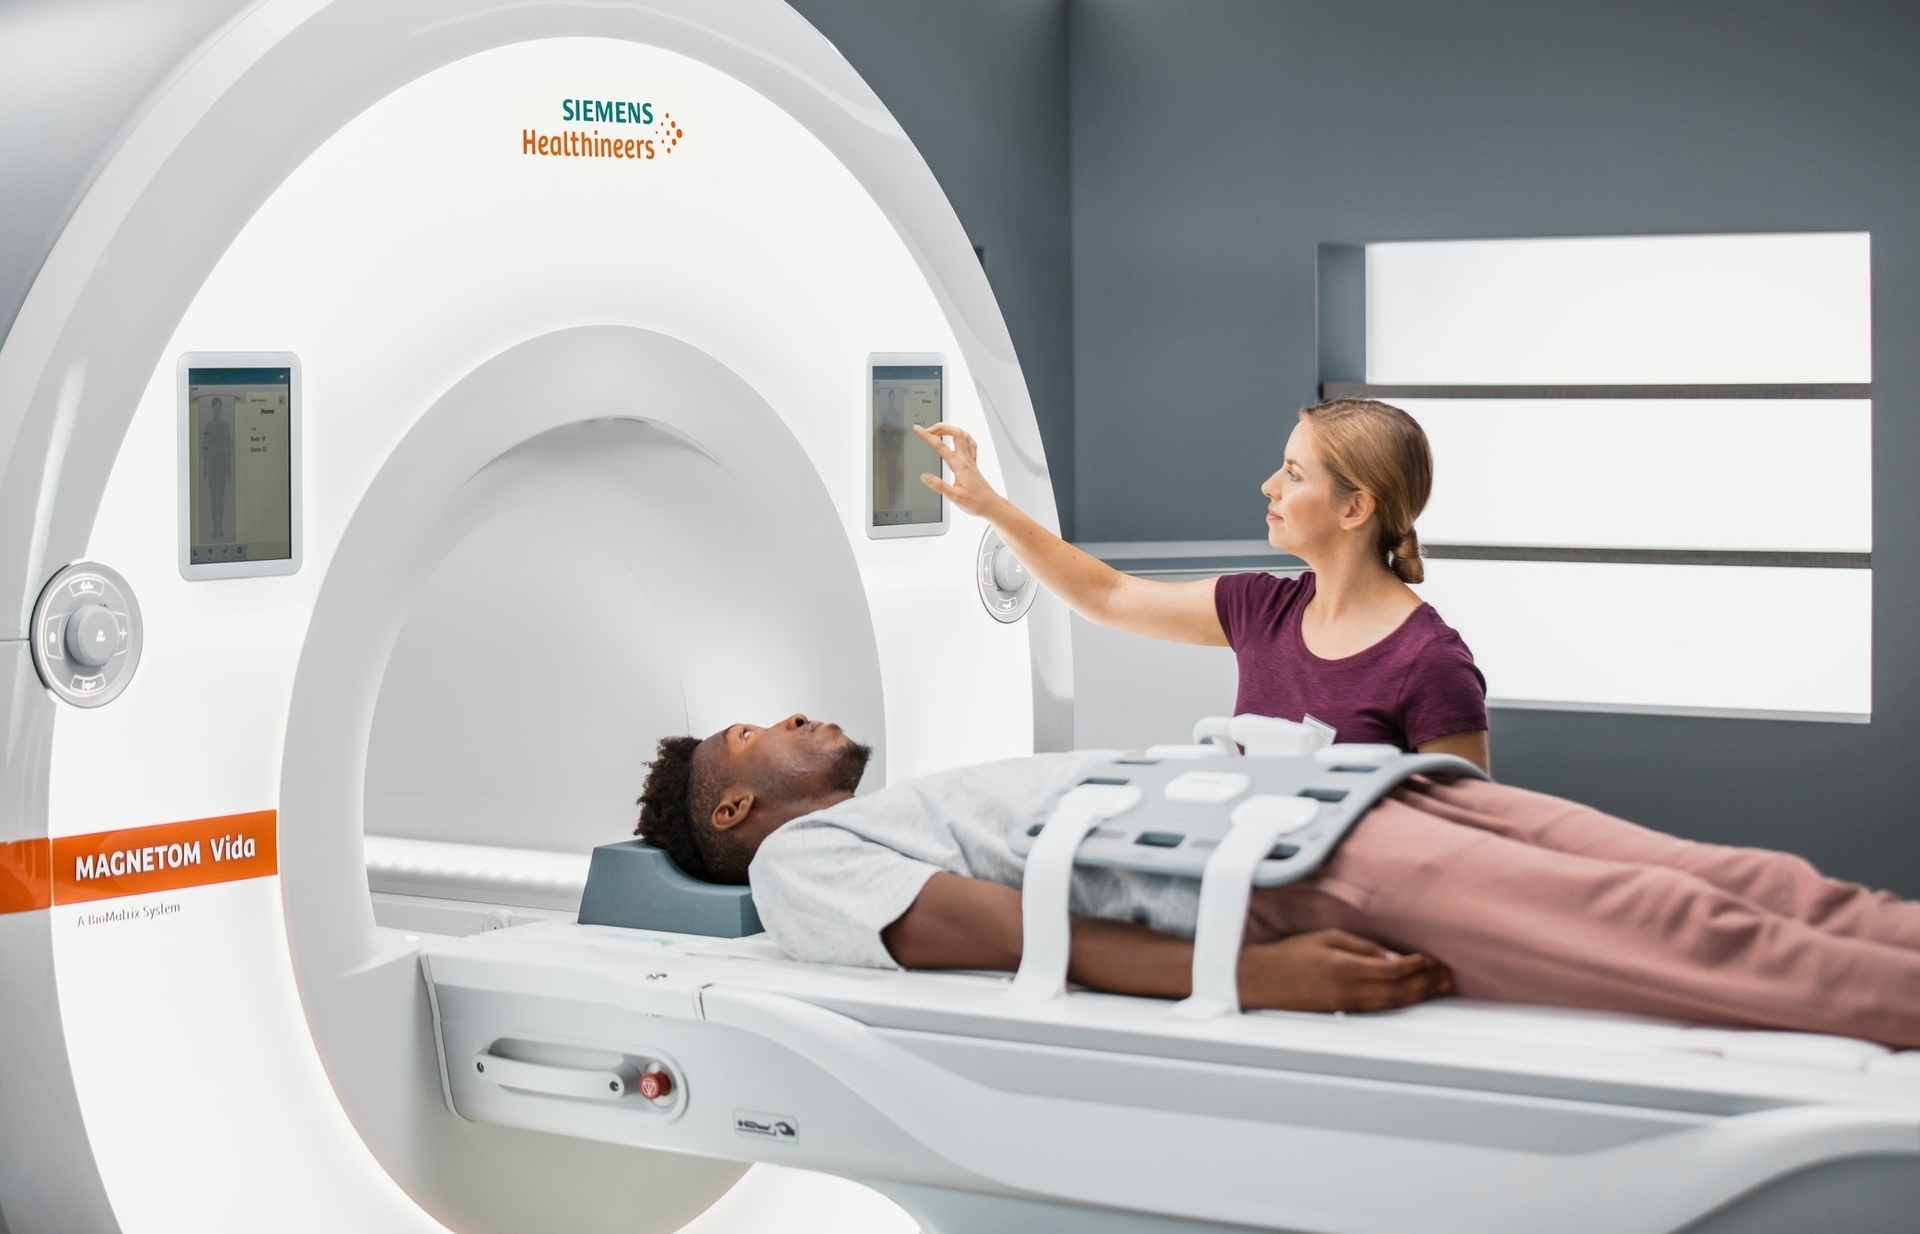 Bringing Siemens tech to healthcare